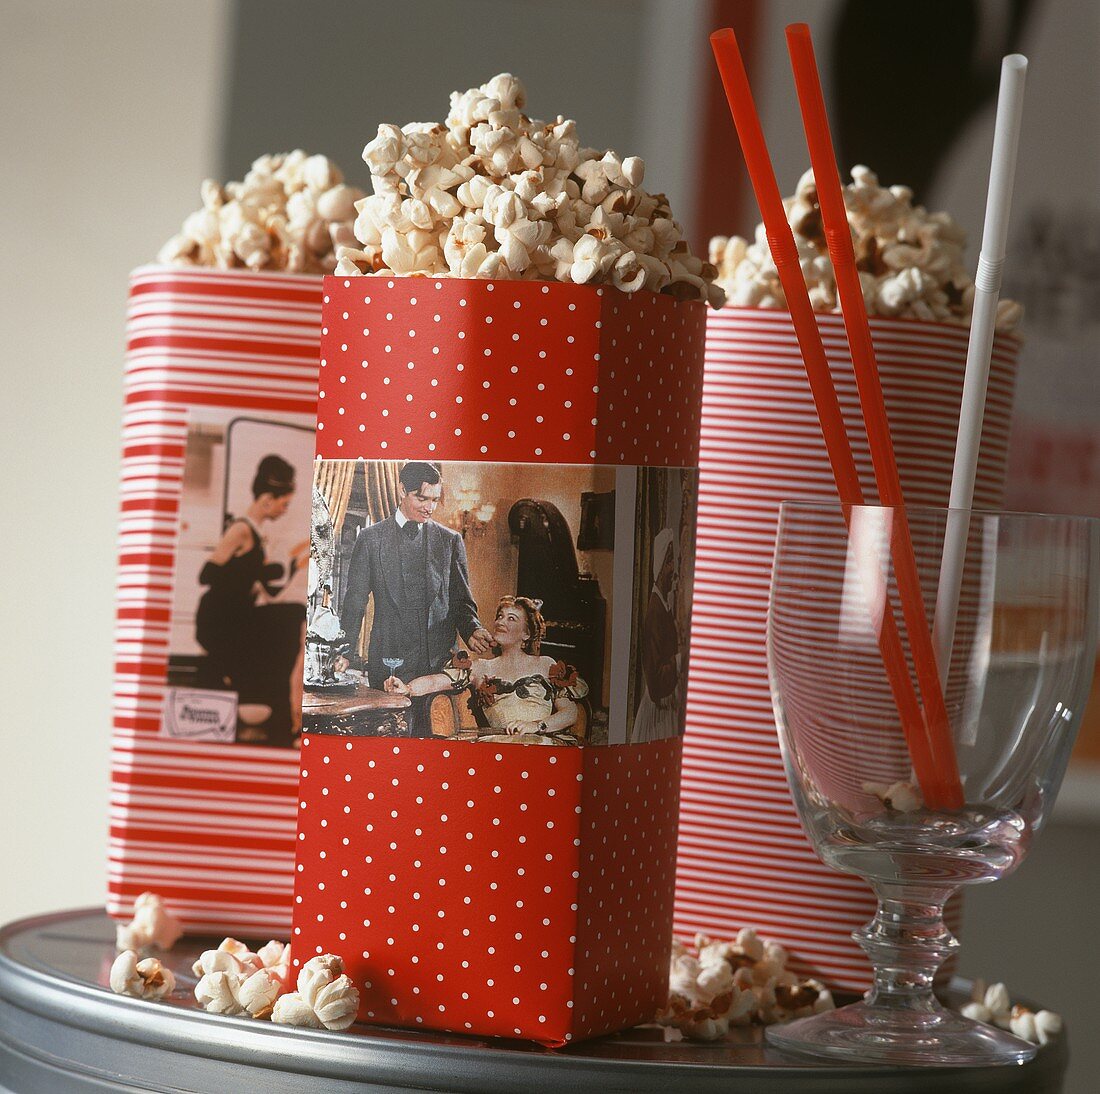 Popcorn in Papiertüten mit Kino-Motiven